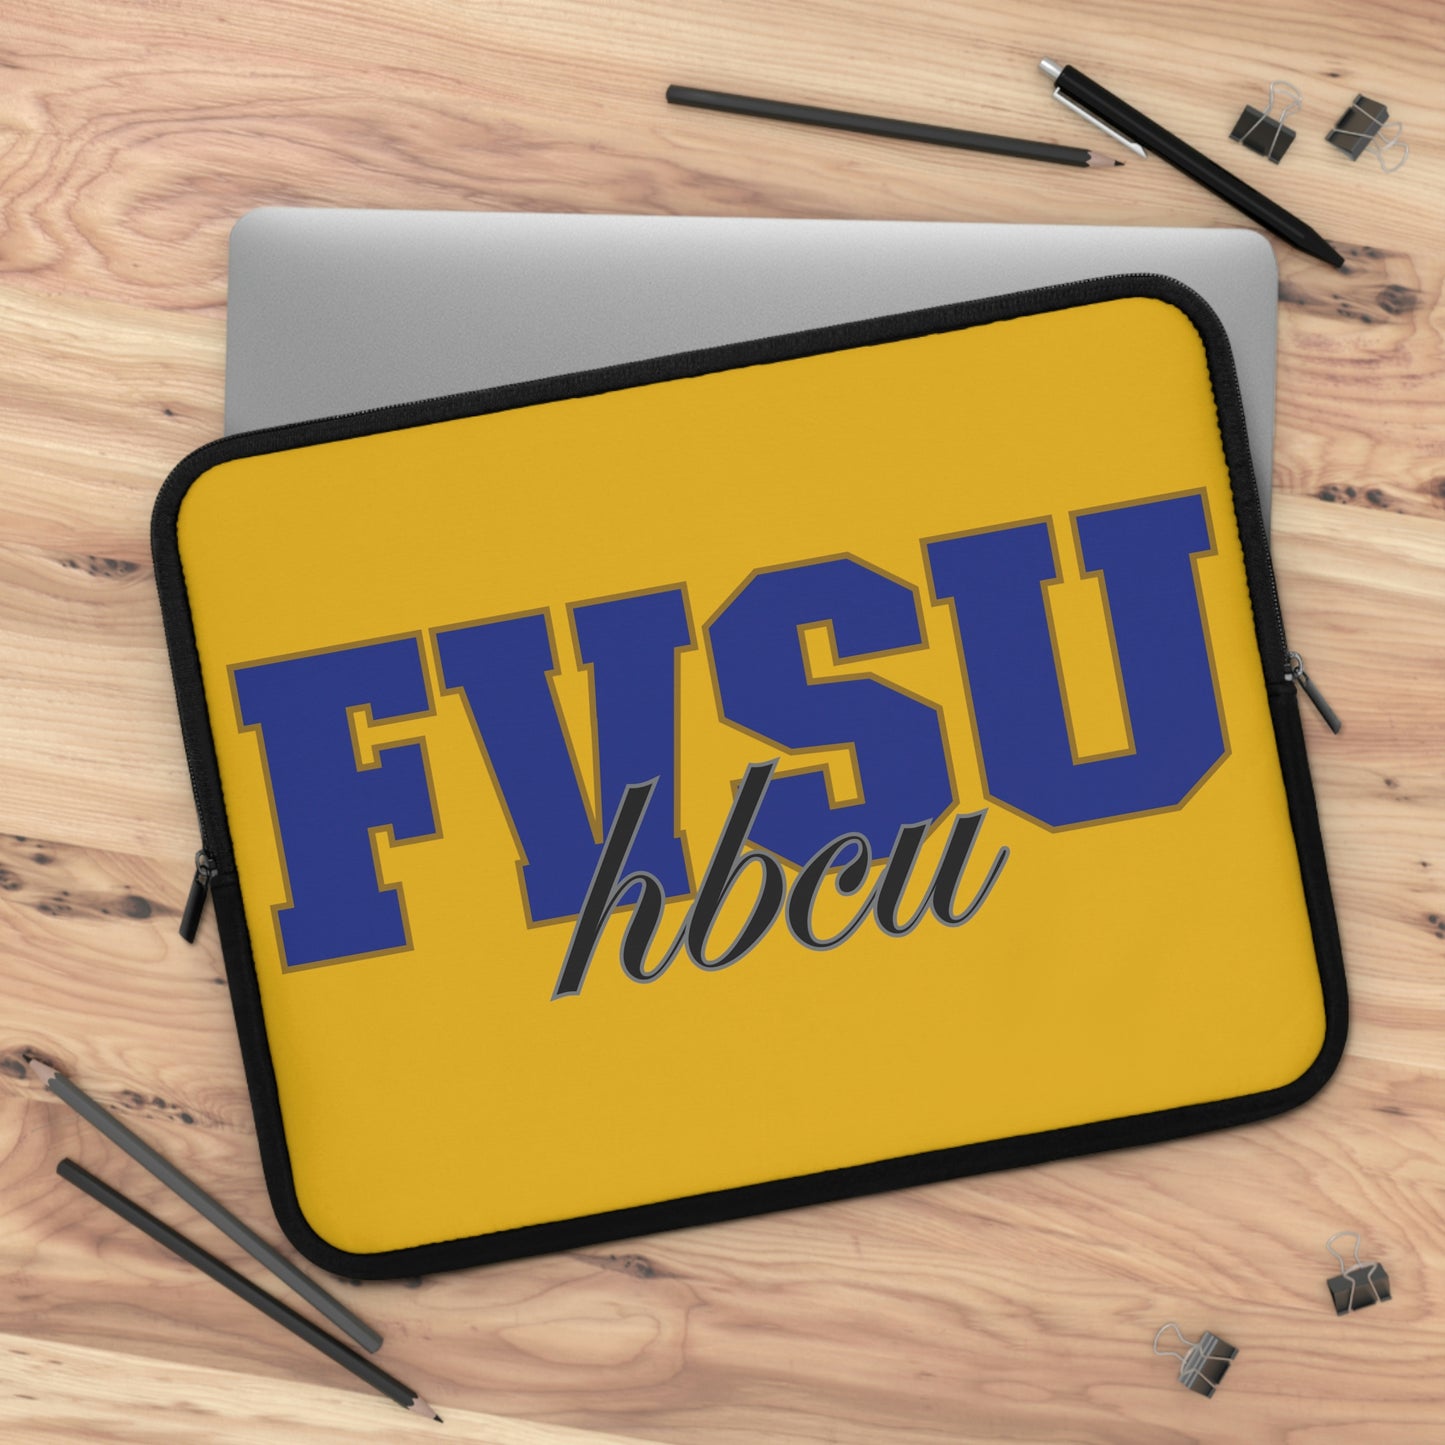 HBCU Love (Fort Valley State University/ Laptop Sleeve)